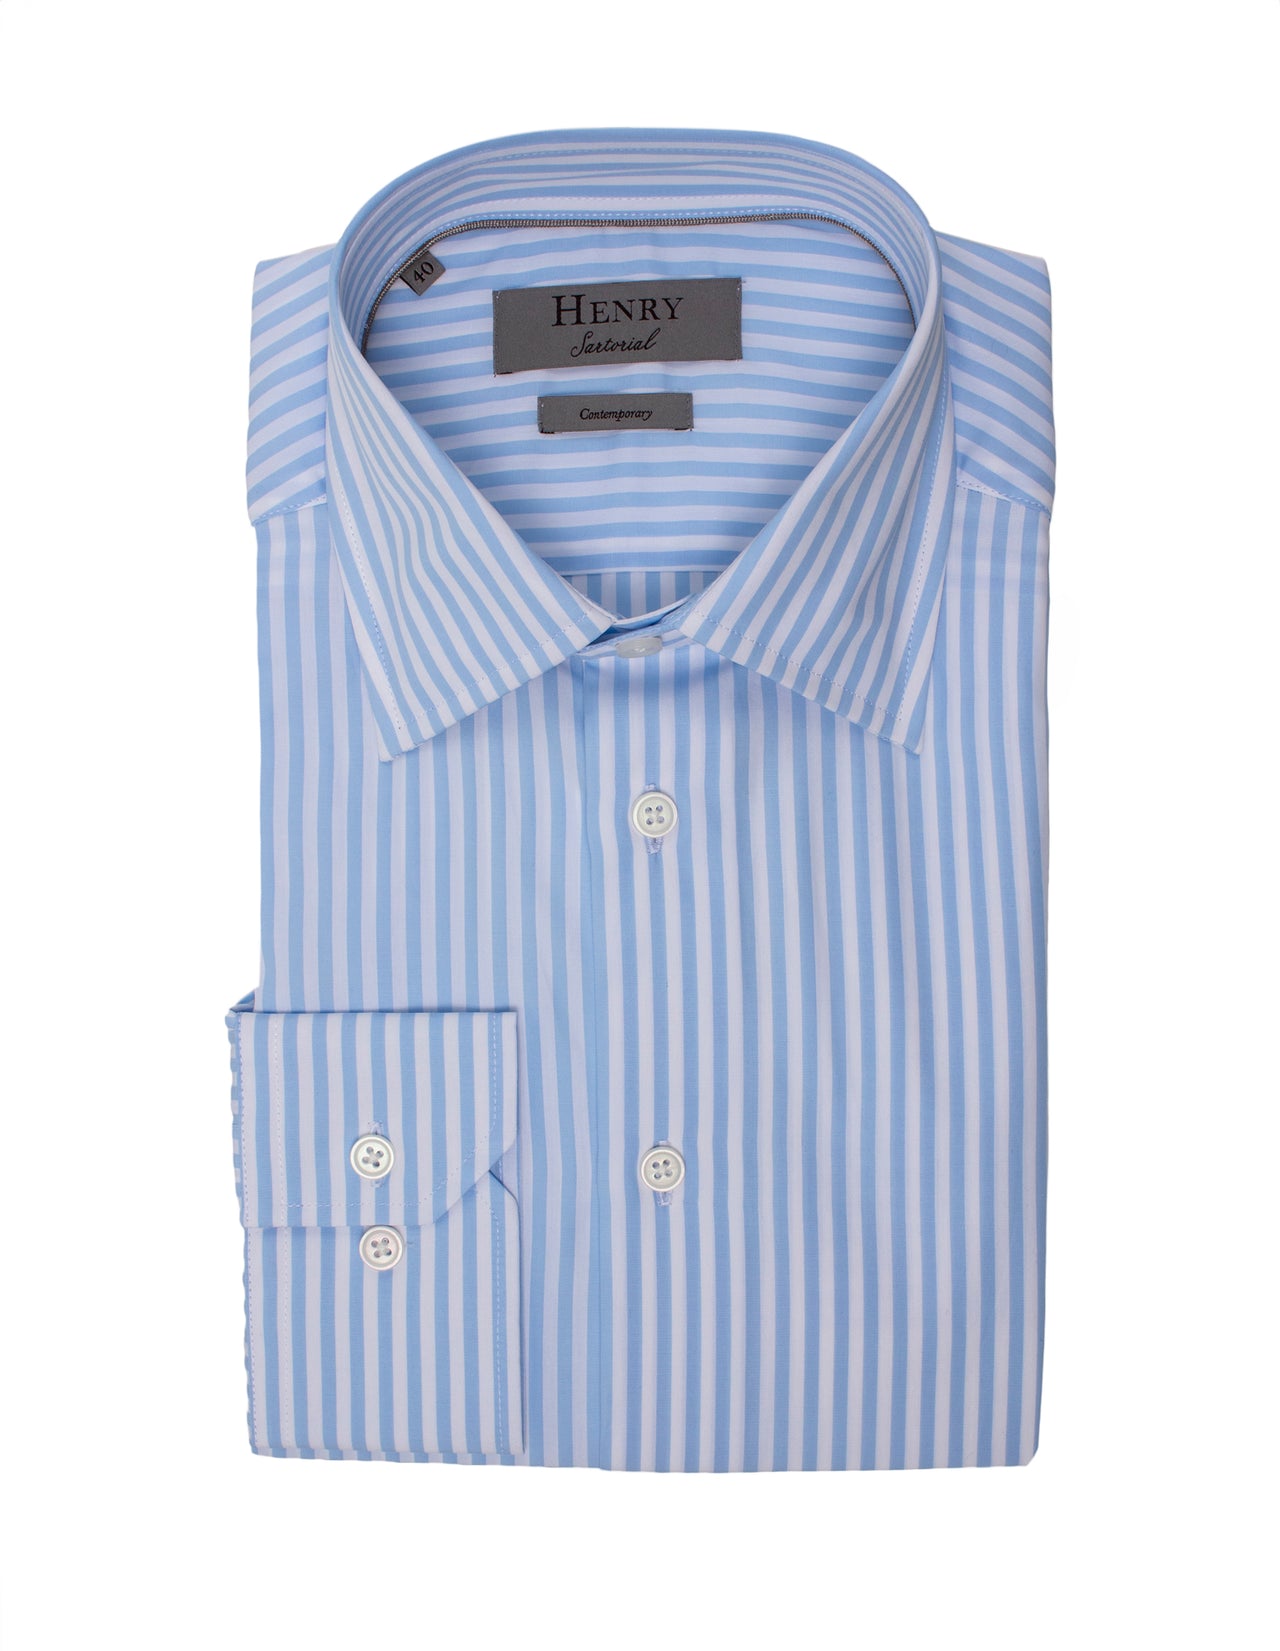 HENRY SARTORIAL Classic Fit Stripe Shirt BLUE/WHITE